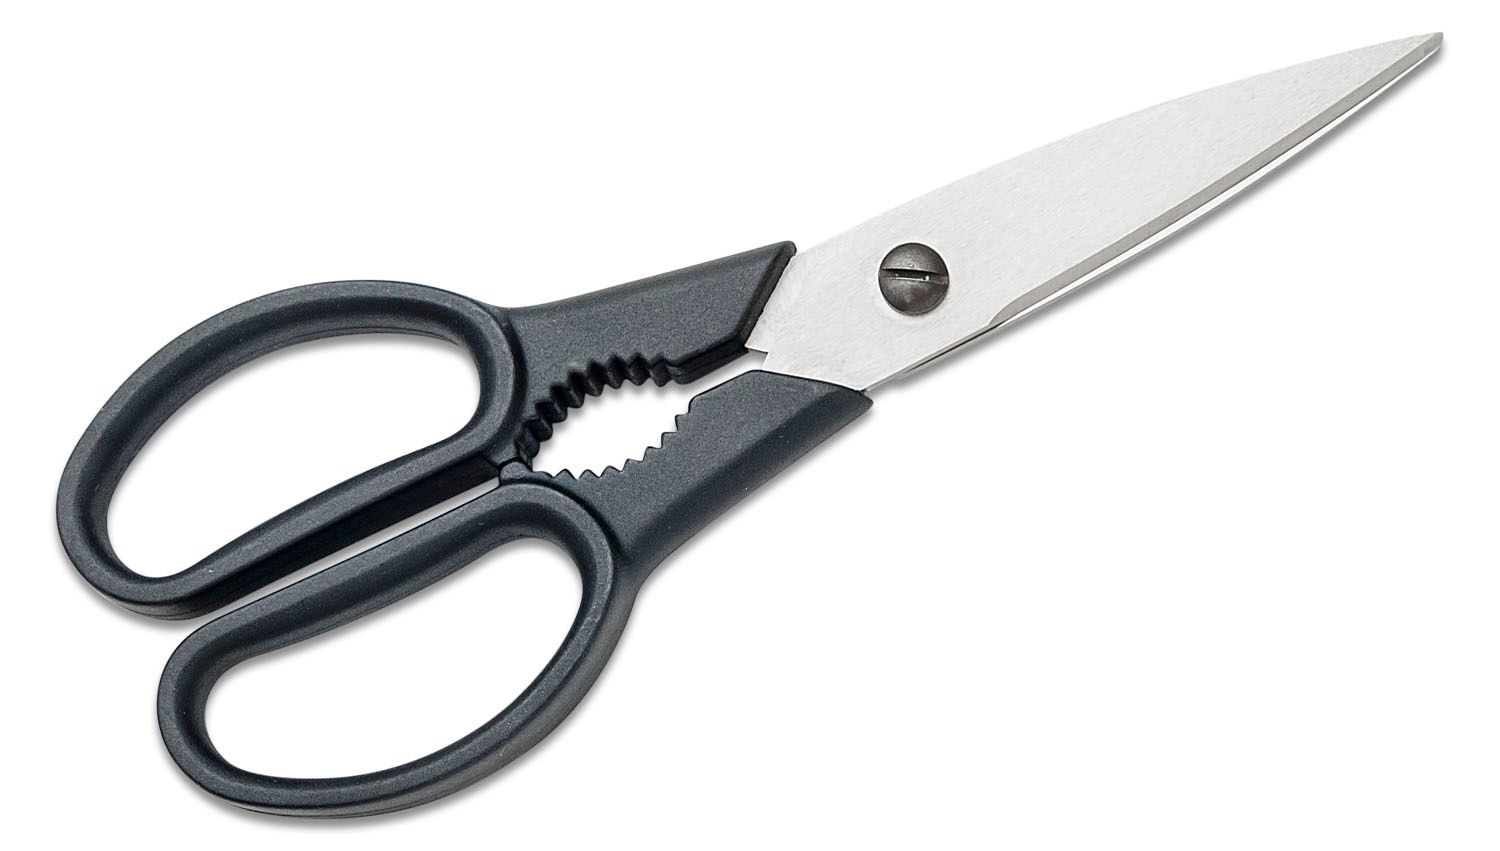 Twin L Scissors 19 cm - Zwilling 41300-191-0